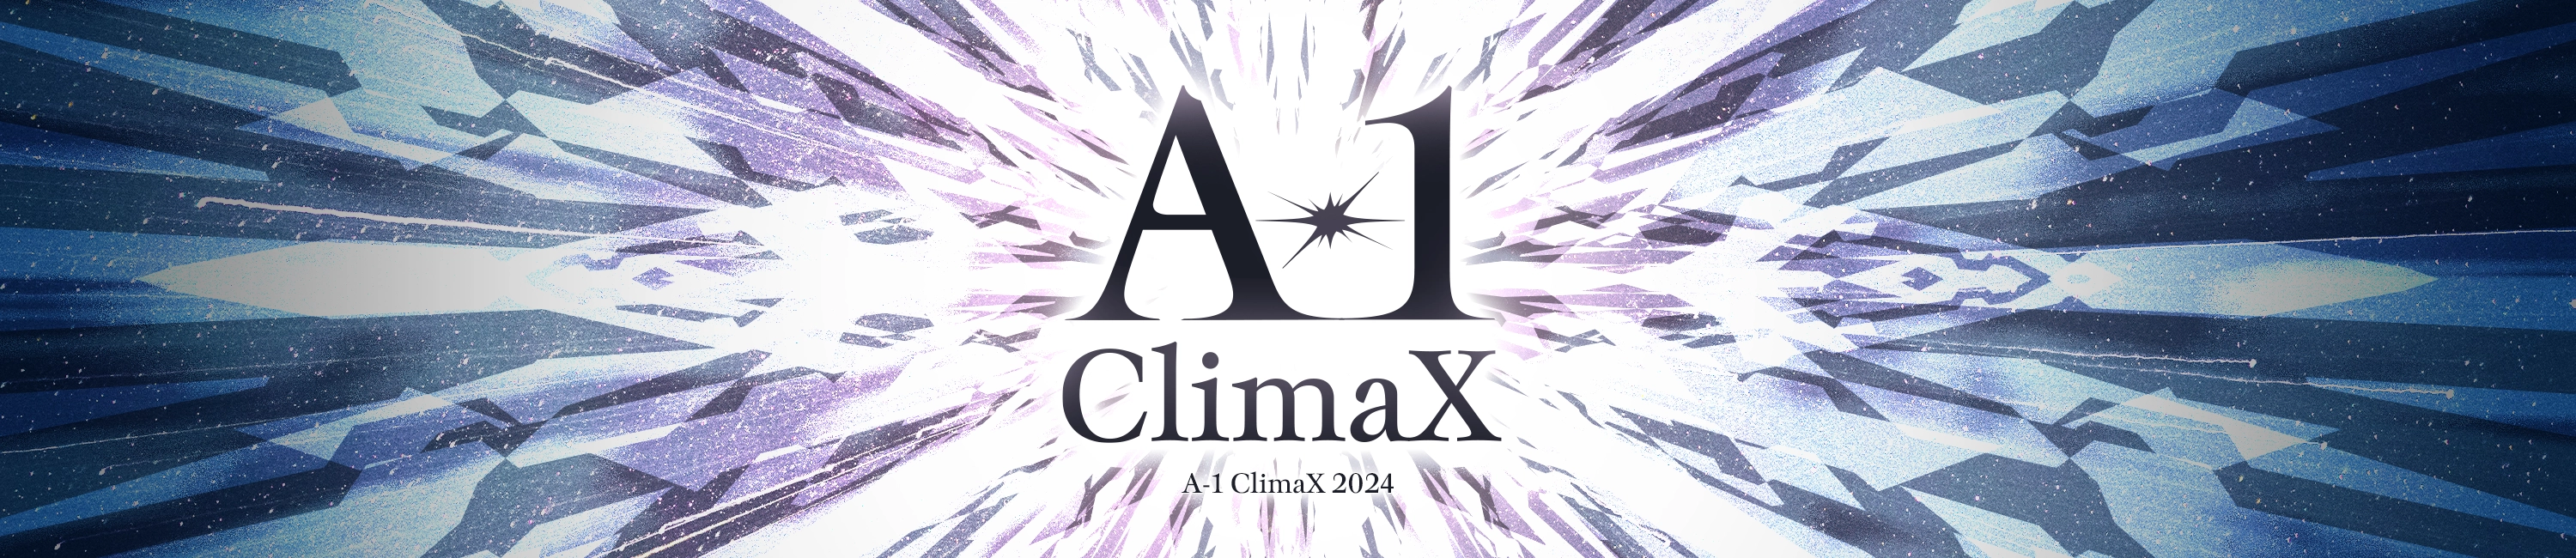 A-1 ClimaX 2024